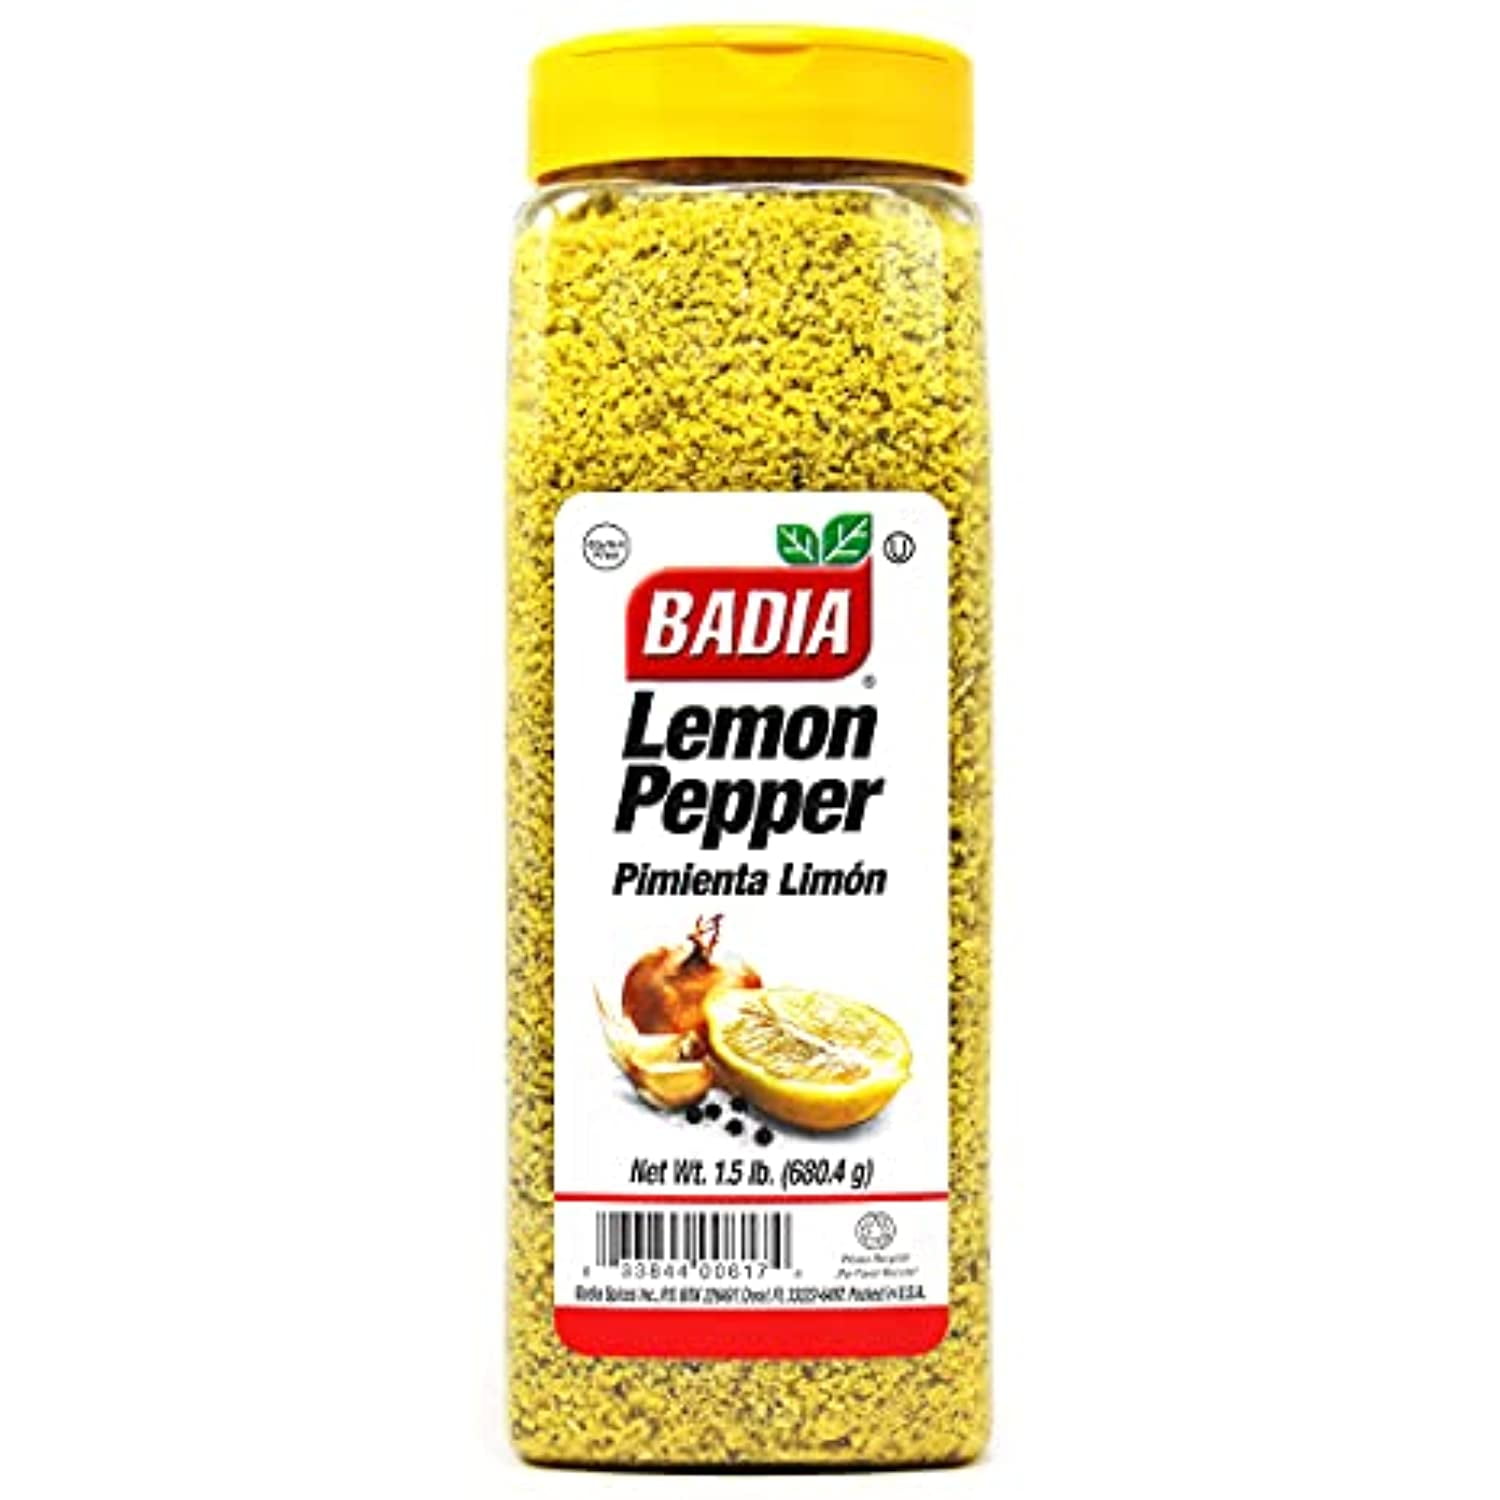  Badia Lemon & Lime Citrus Pepper Bundle - Lime Pepper and  Lemon Pepper Seasoning Set - 6.5 Oz Each - Qbin Recipe Card - Premium  Handcrafted Blends with Tangy Lemon